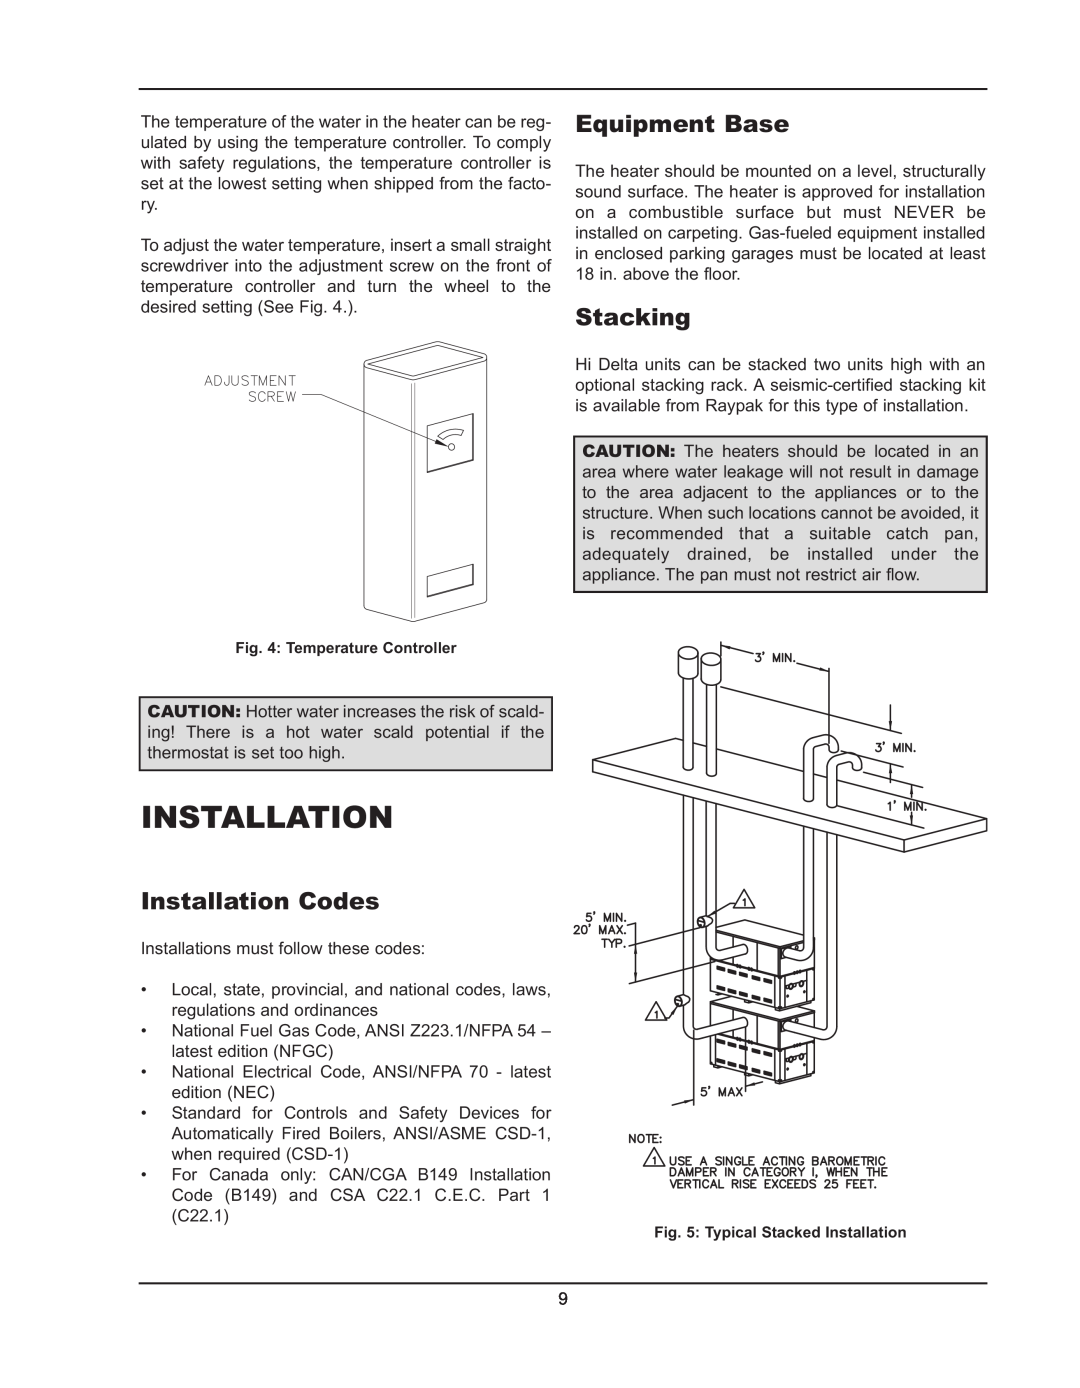 Raypak 992B manual Equipment Base, Stacking, Installation Codes 